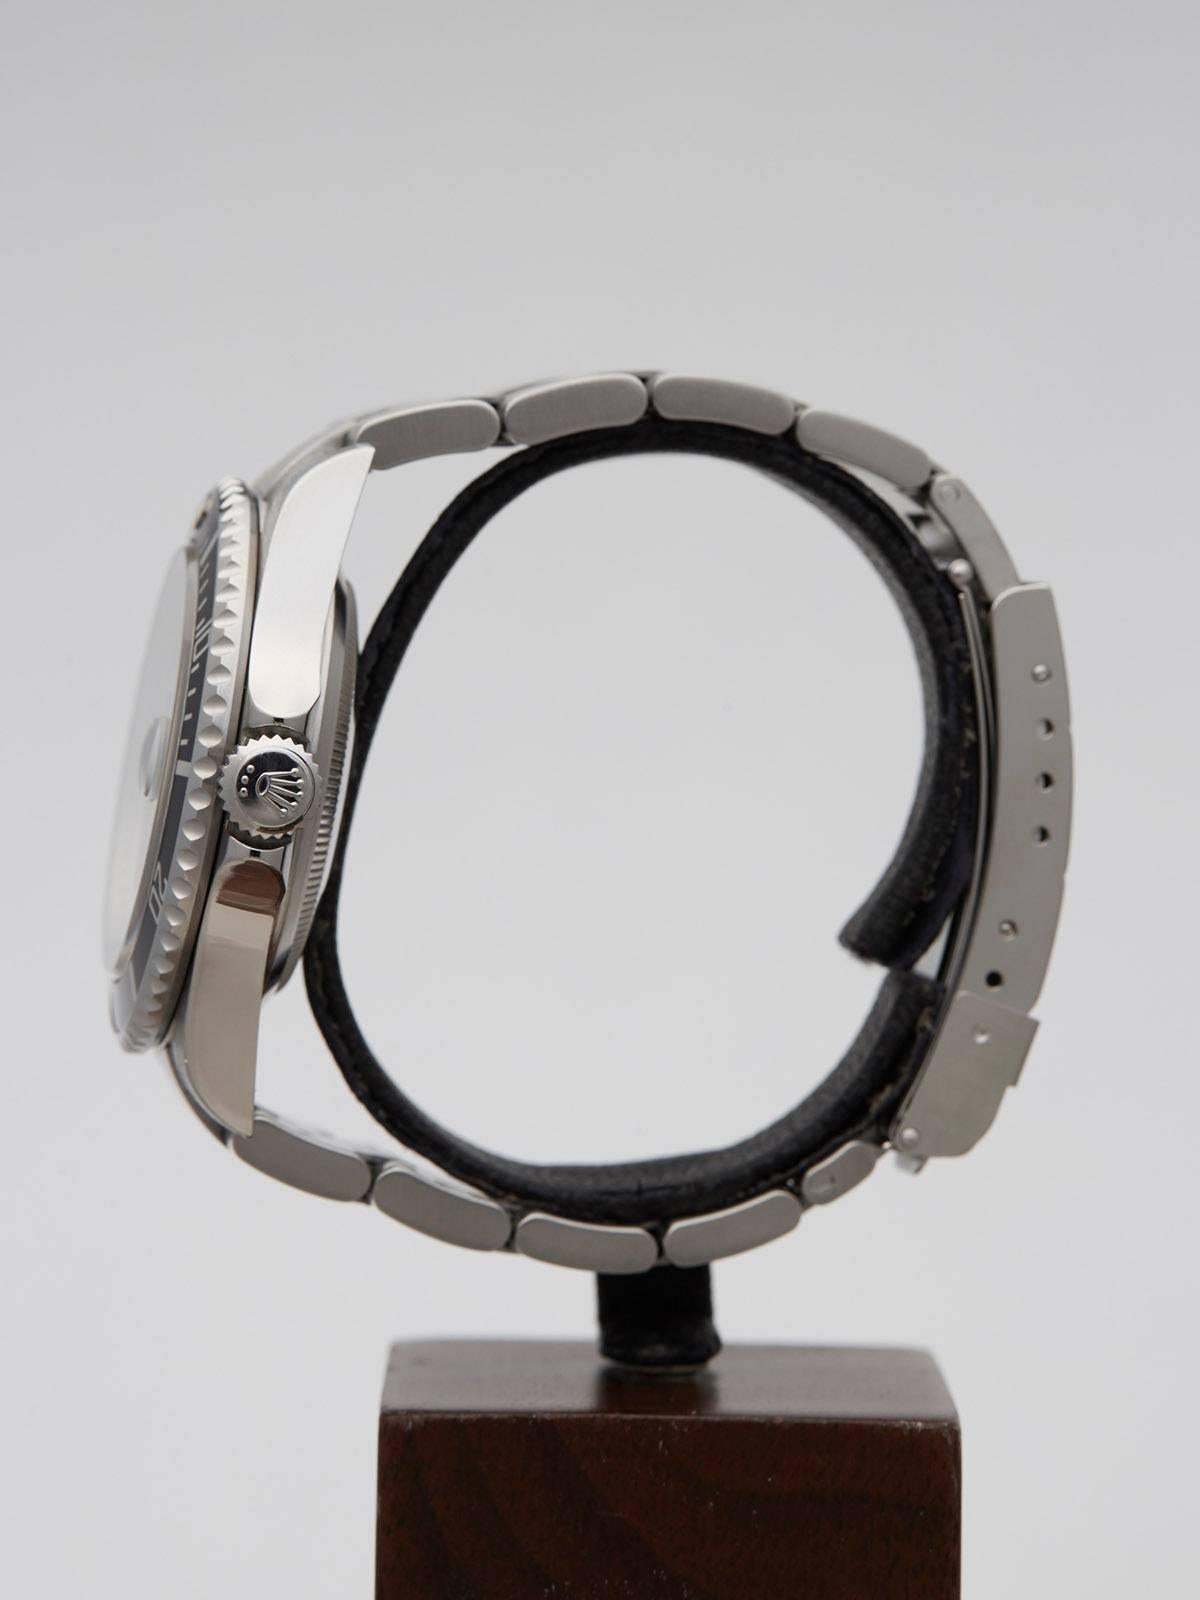 Rolex Stainless Steel Submariner Automatic Wristwatch 1